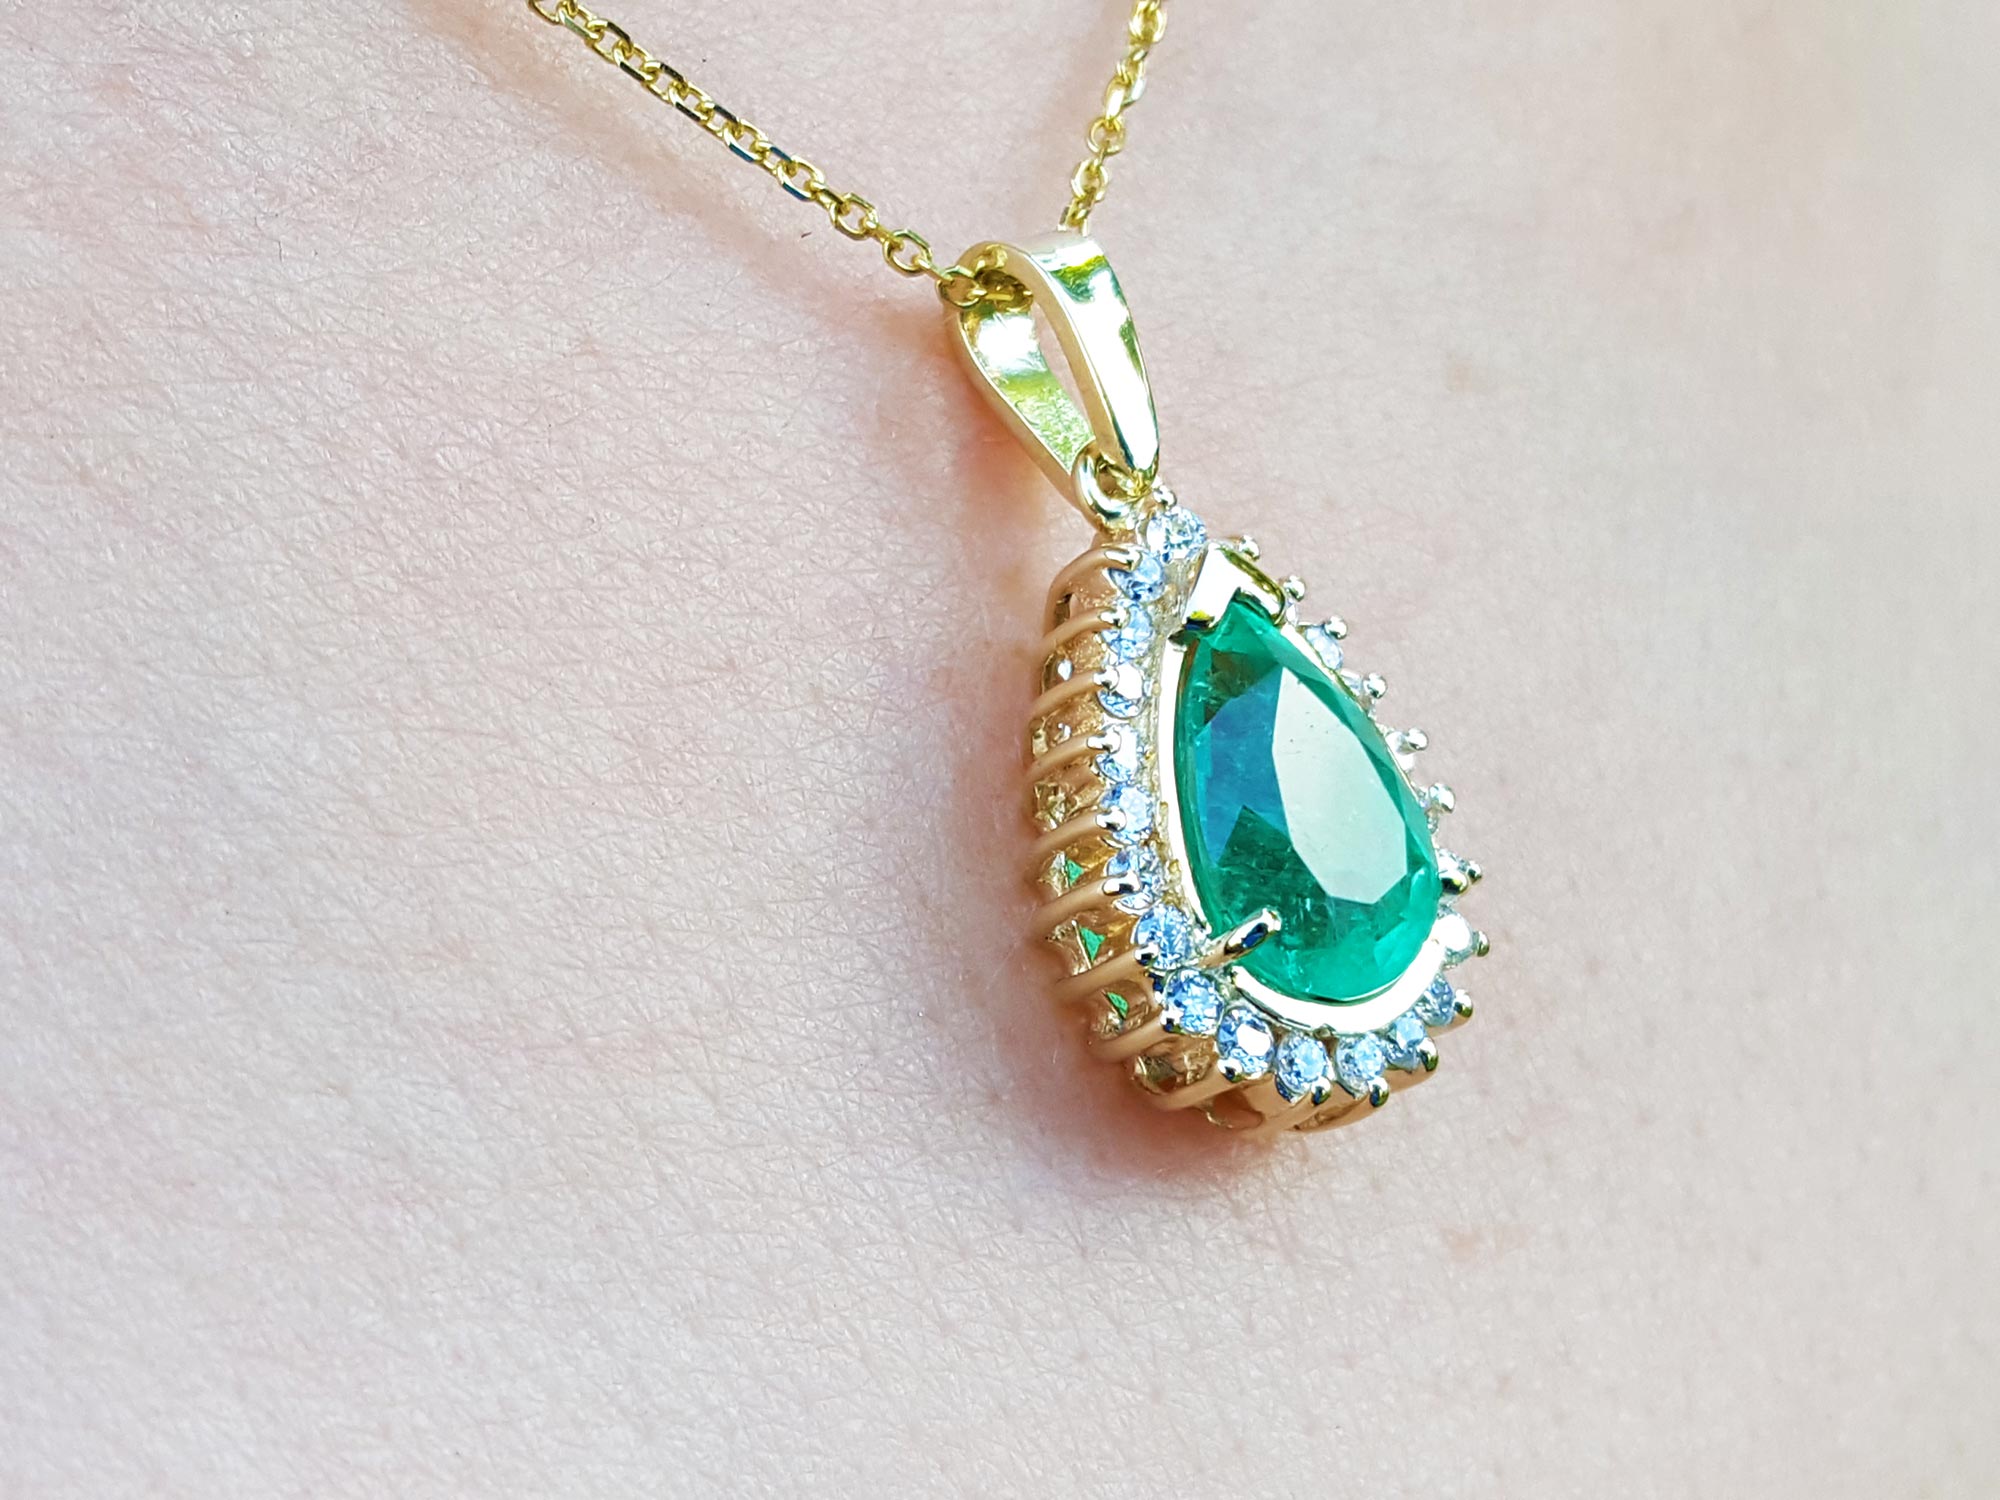 Real emerald pendant